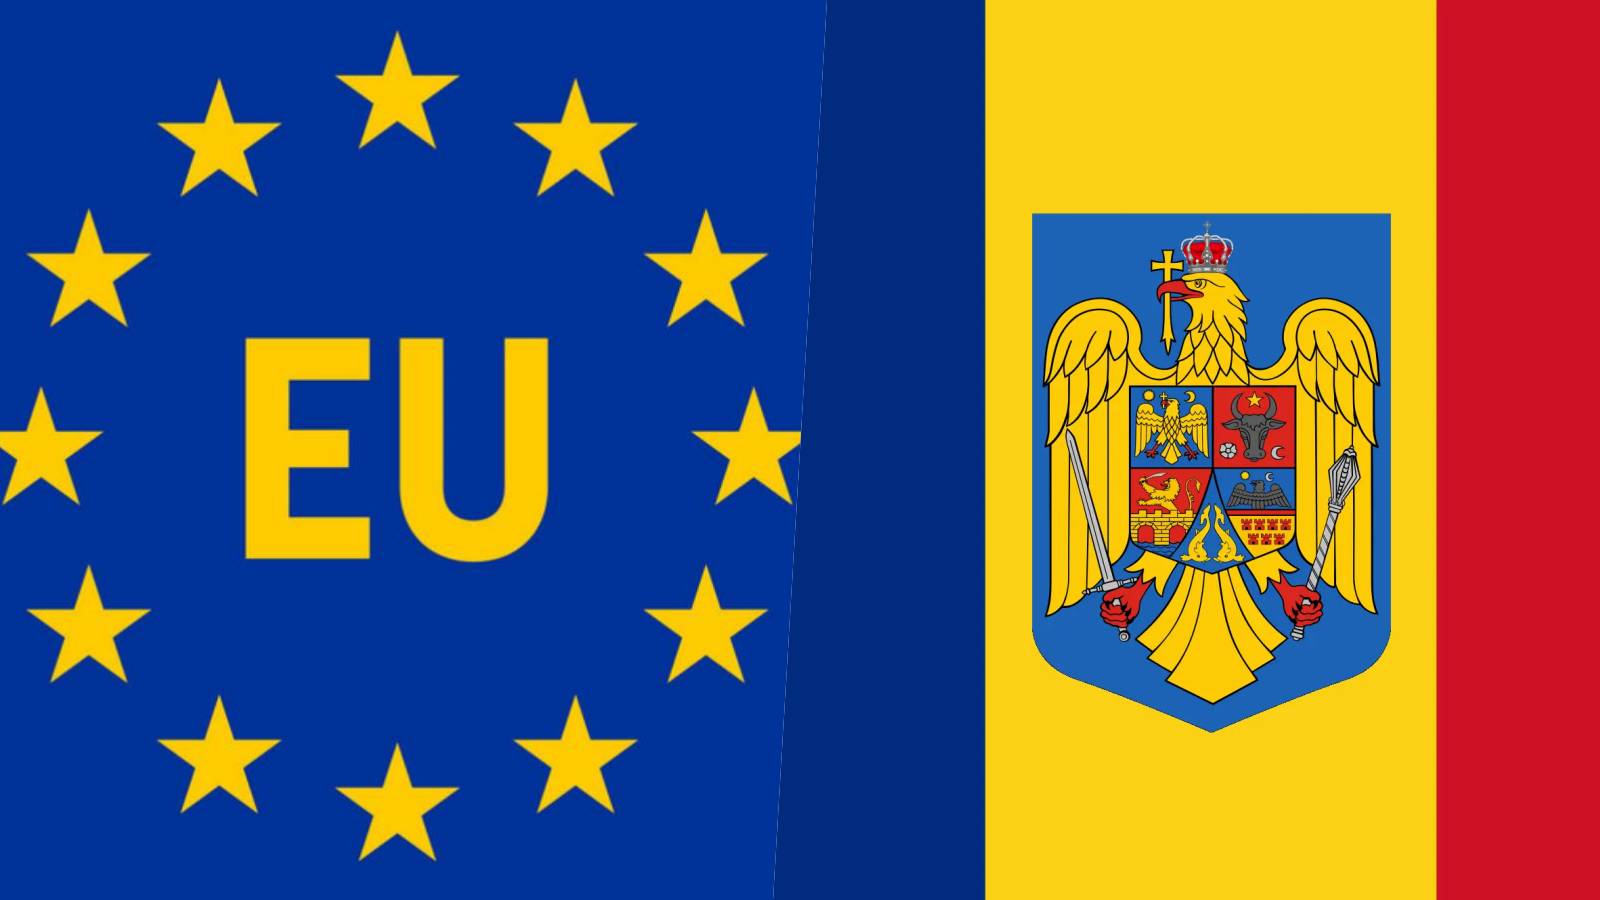 Schengen Actiunile Oficiale ULTIM MOMENT Finalizarea Aderarii Romaniei Schengen